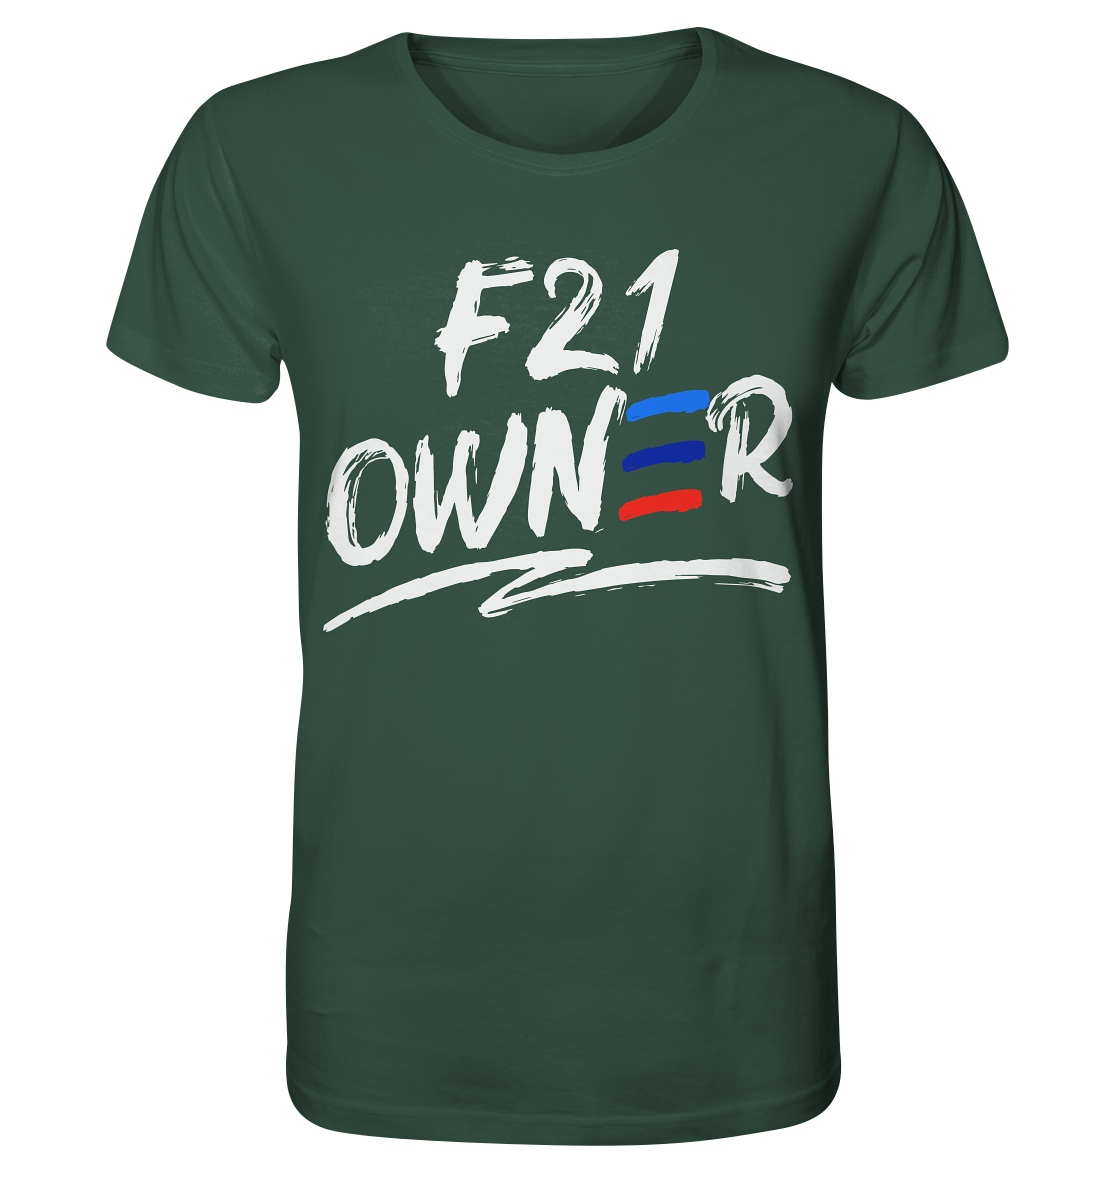 BGKF21OWNER Organic Shirt